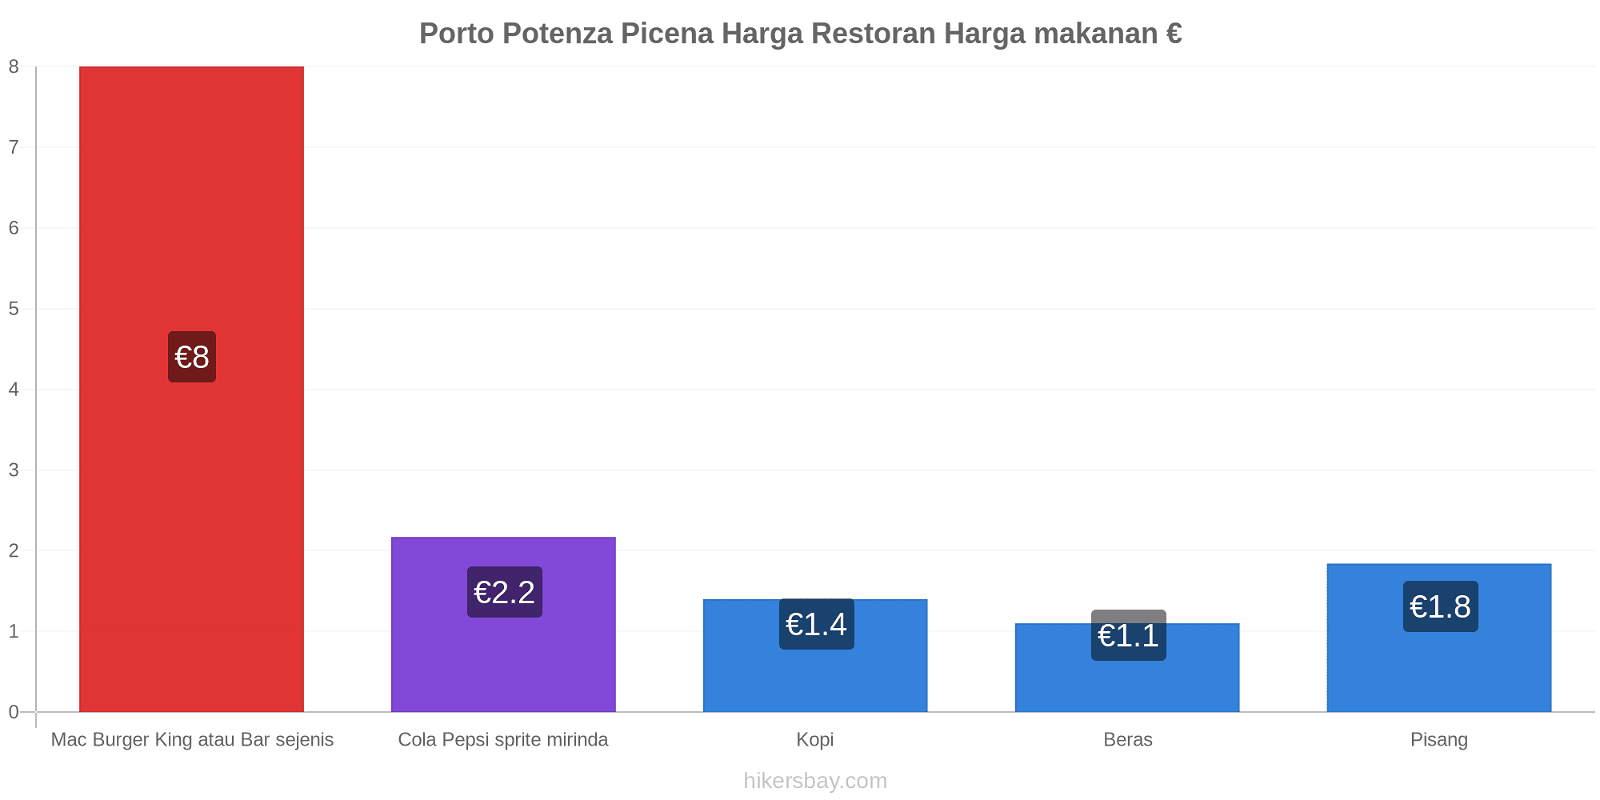 Porto Potenza Picena perubahan harga hikersbay.com